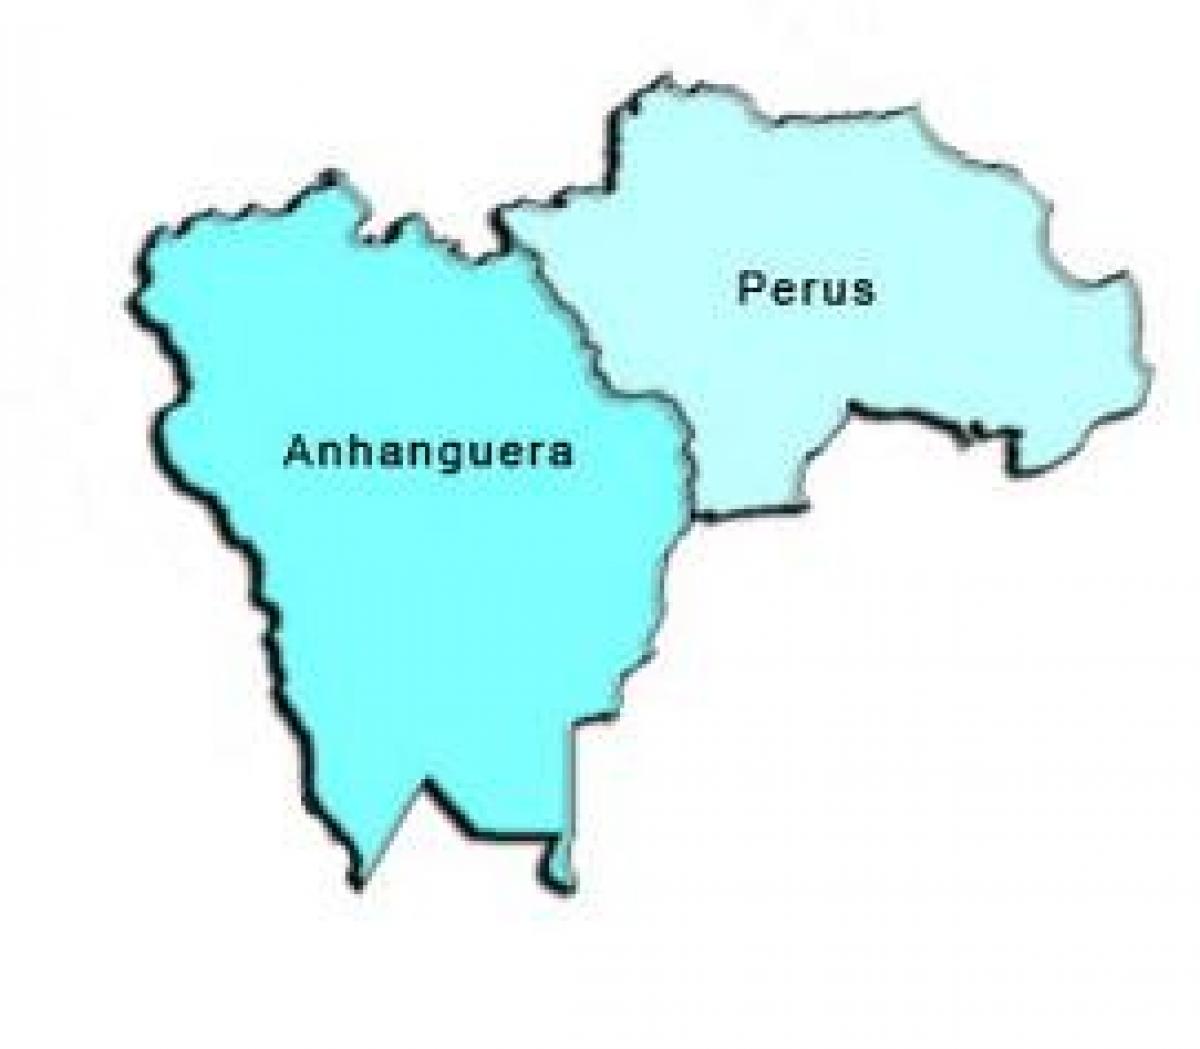 Mapa супрефектур Перус